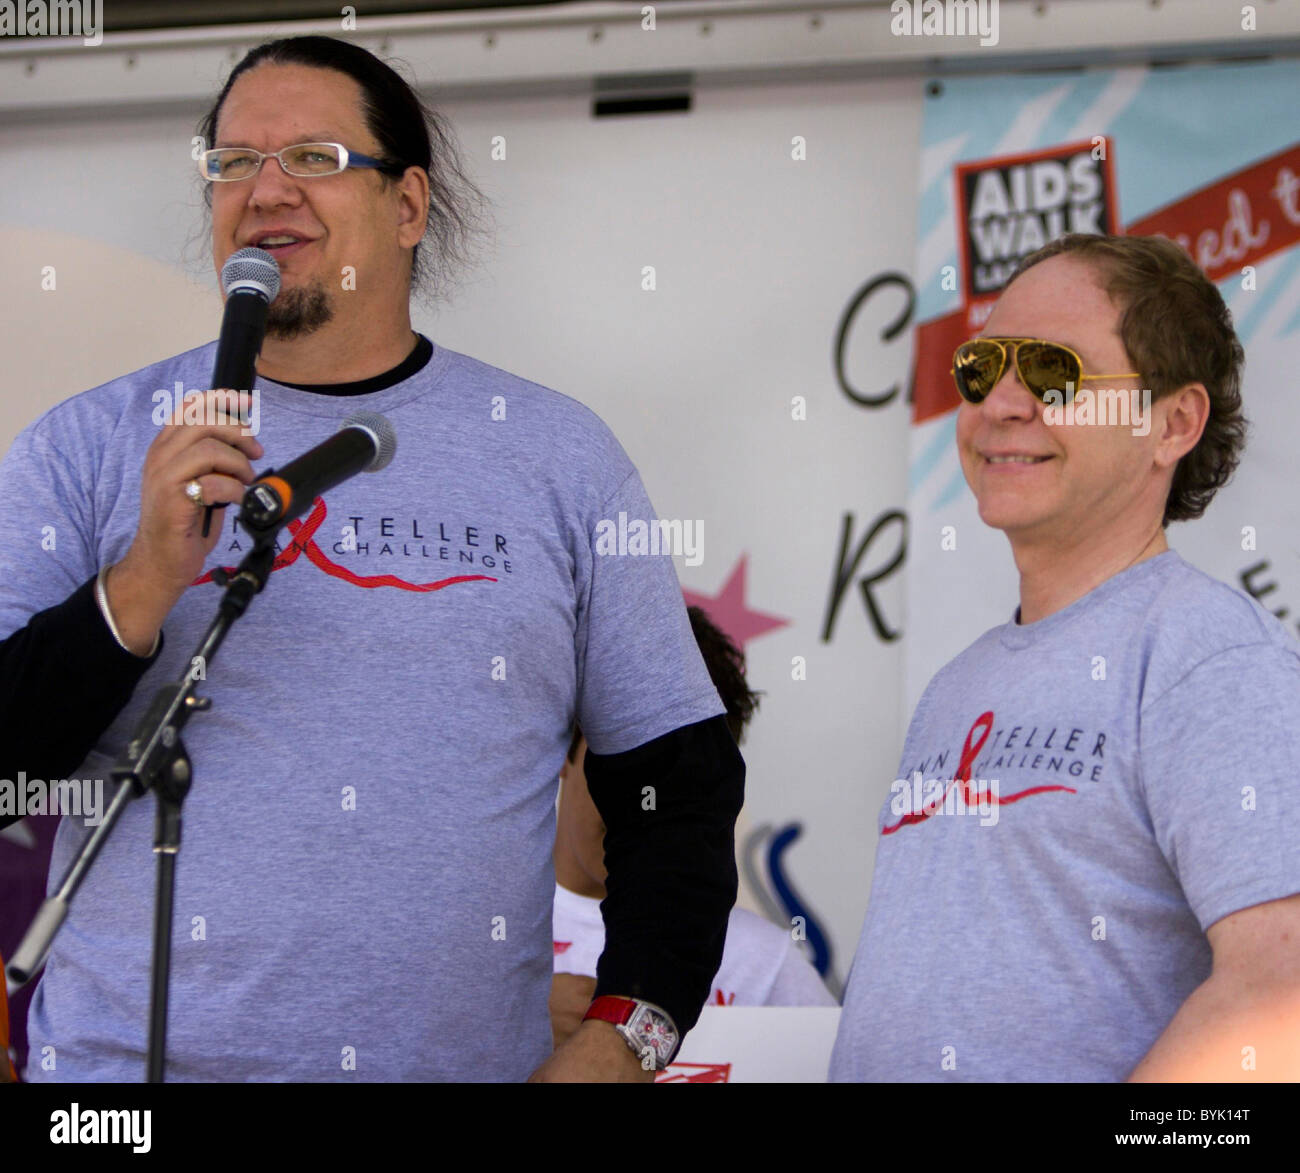 Penn Jillette and Teller of Penn & Teller speak at the 17th Annual AIDS  Walk Las Vegas, USA - 15.04.07 Stock Photo - Alamy